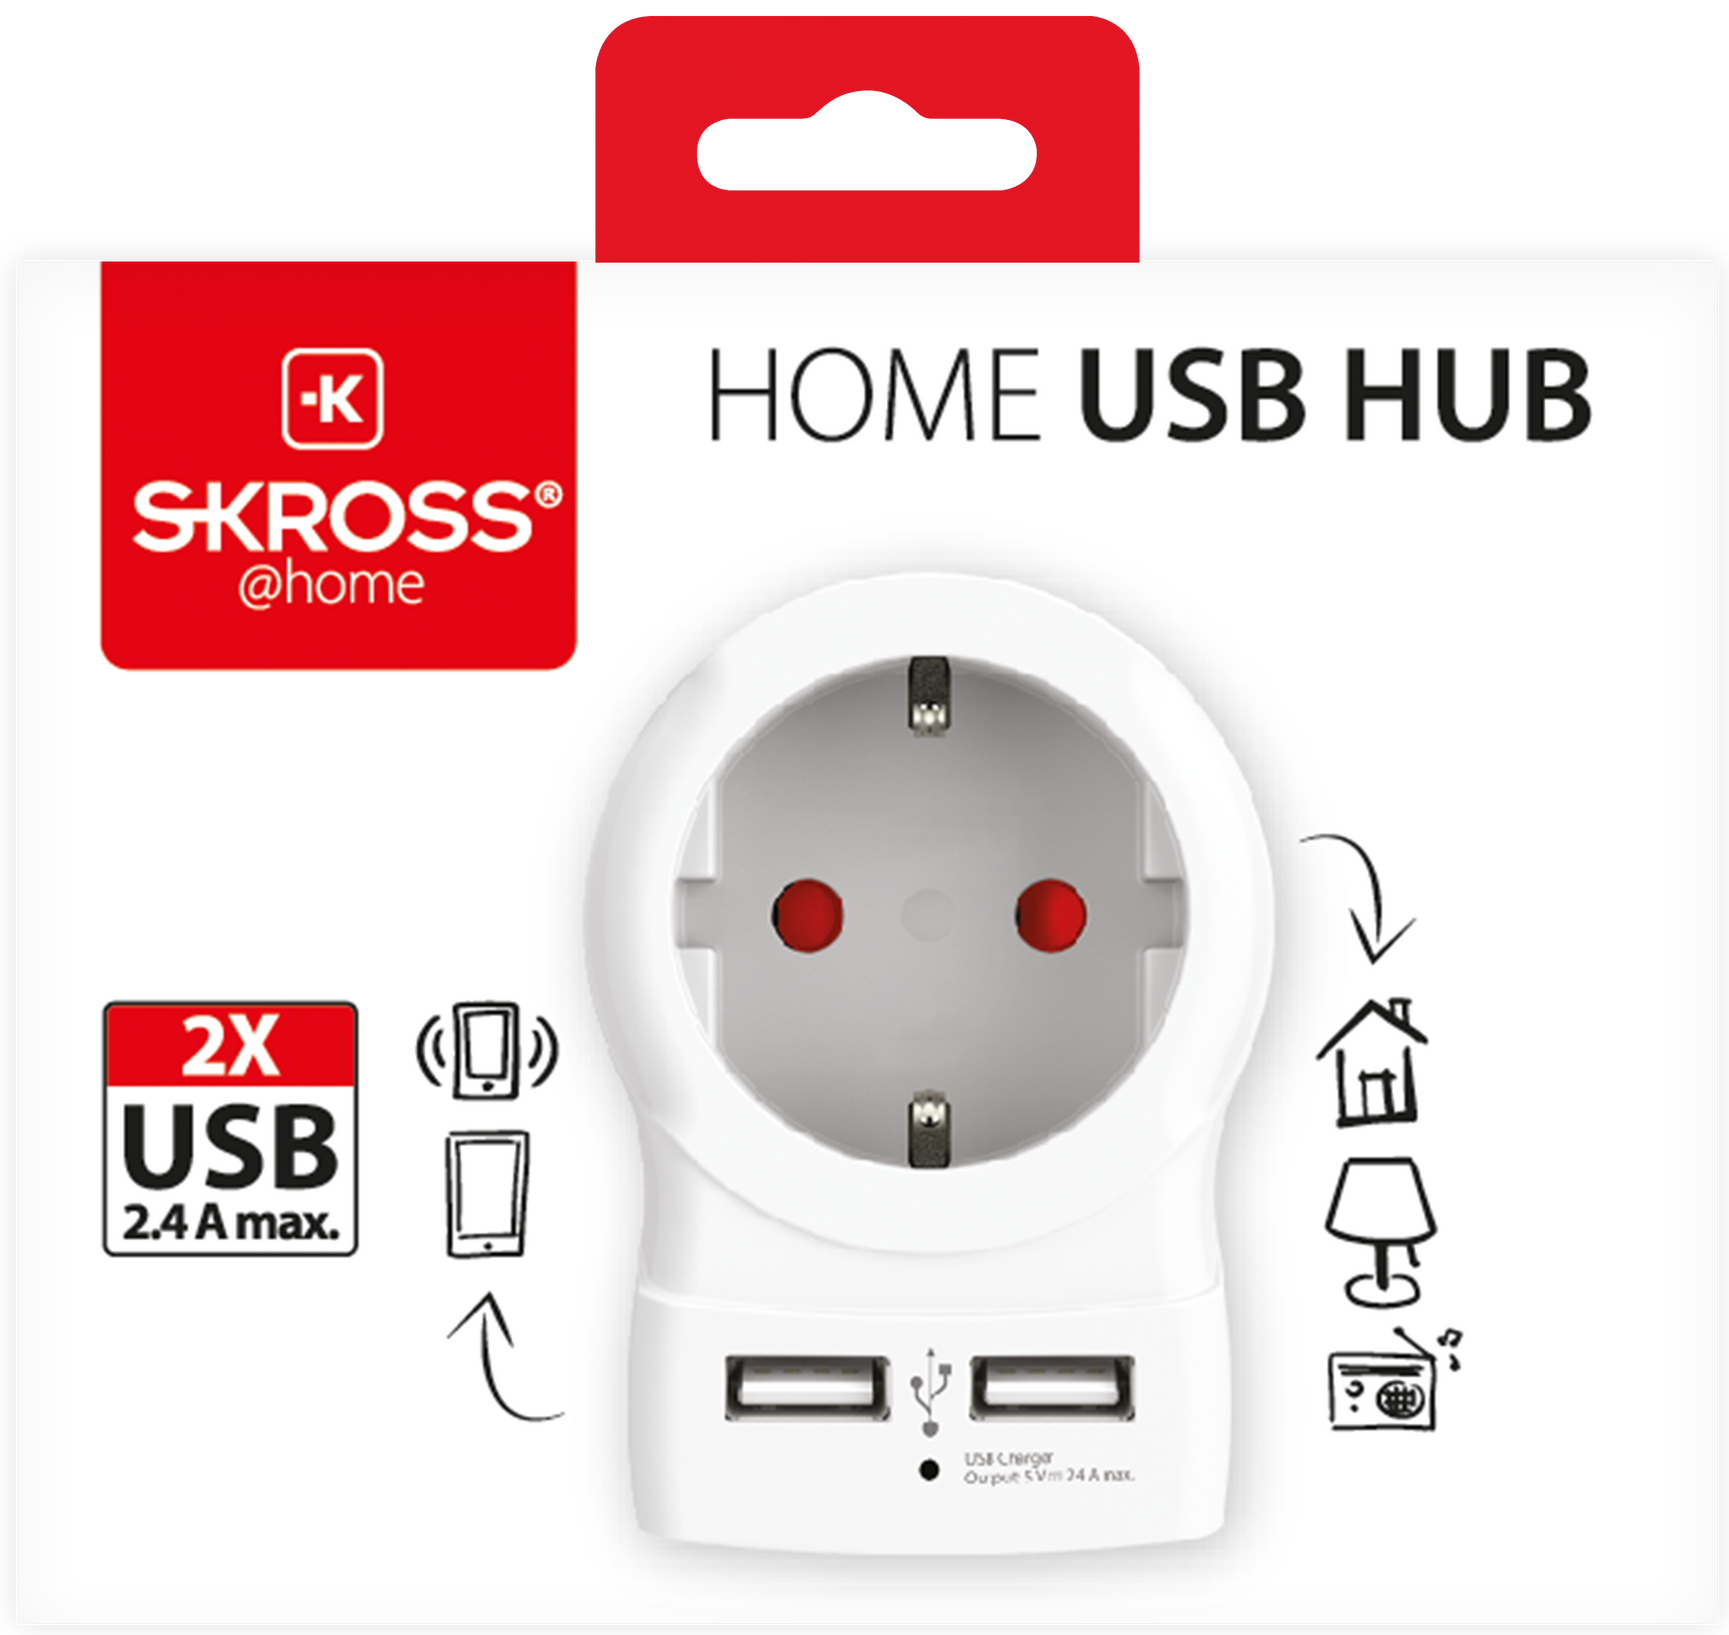 Skross 3-Pole Europe to Europe Home USB HUB Packaging